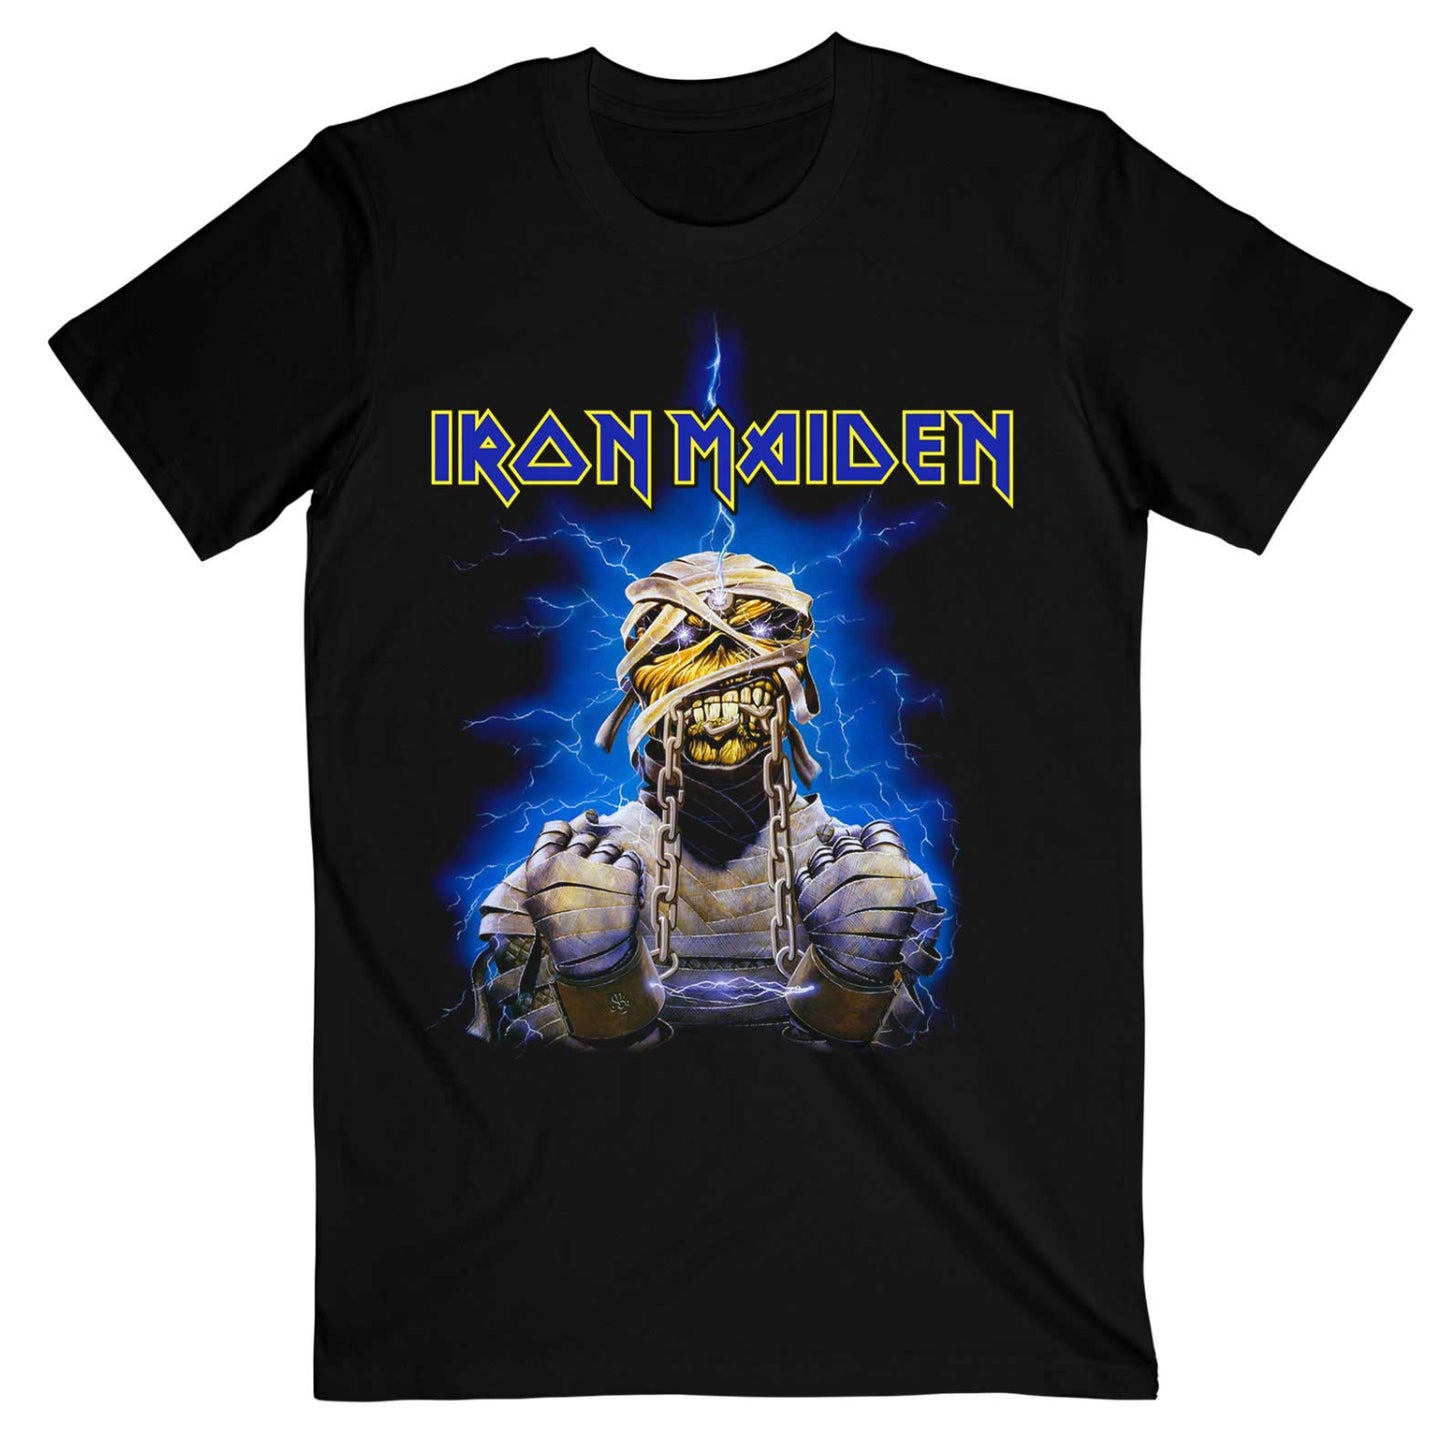 Iron Maiden T-shirts